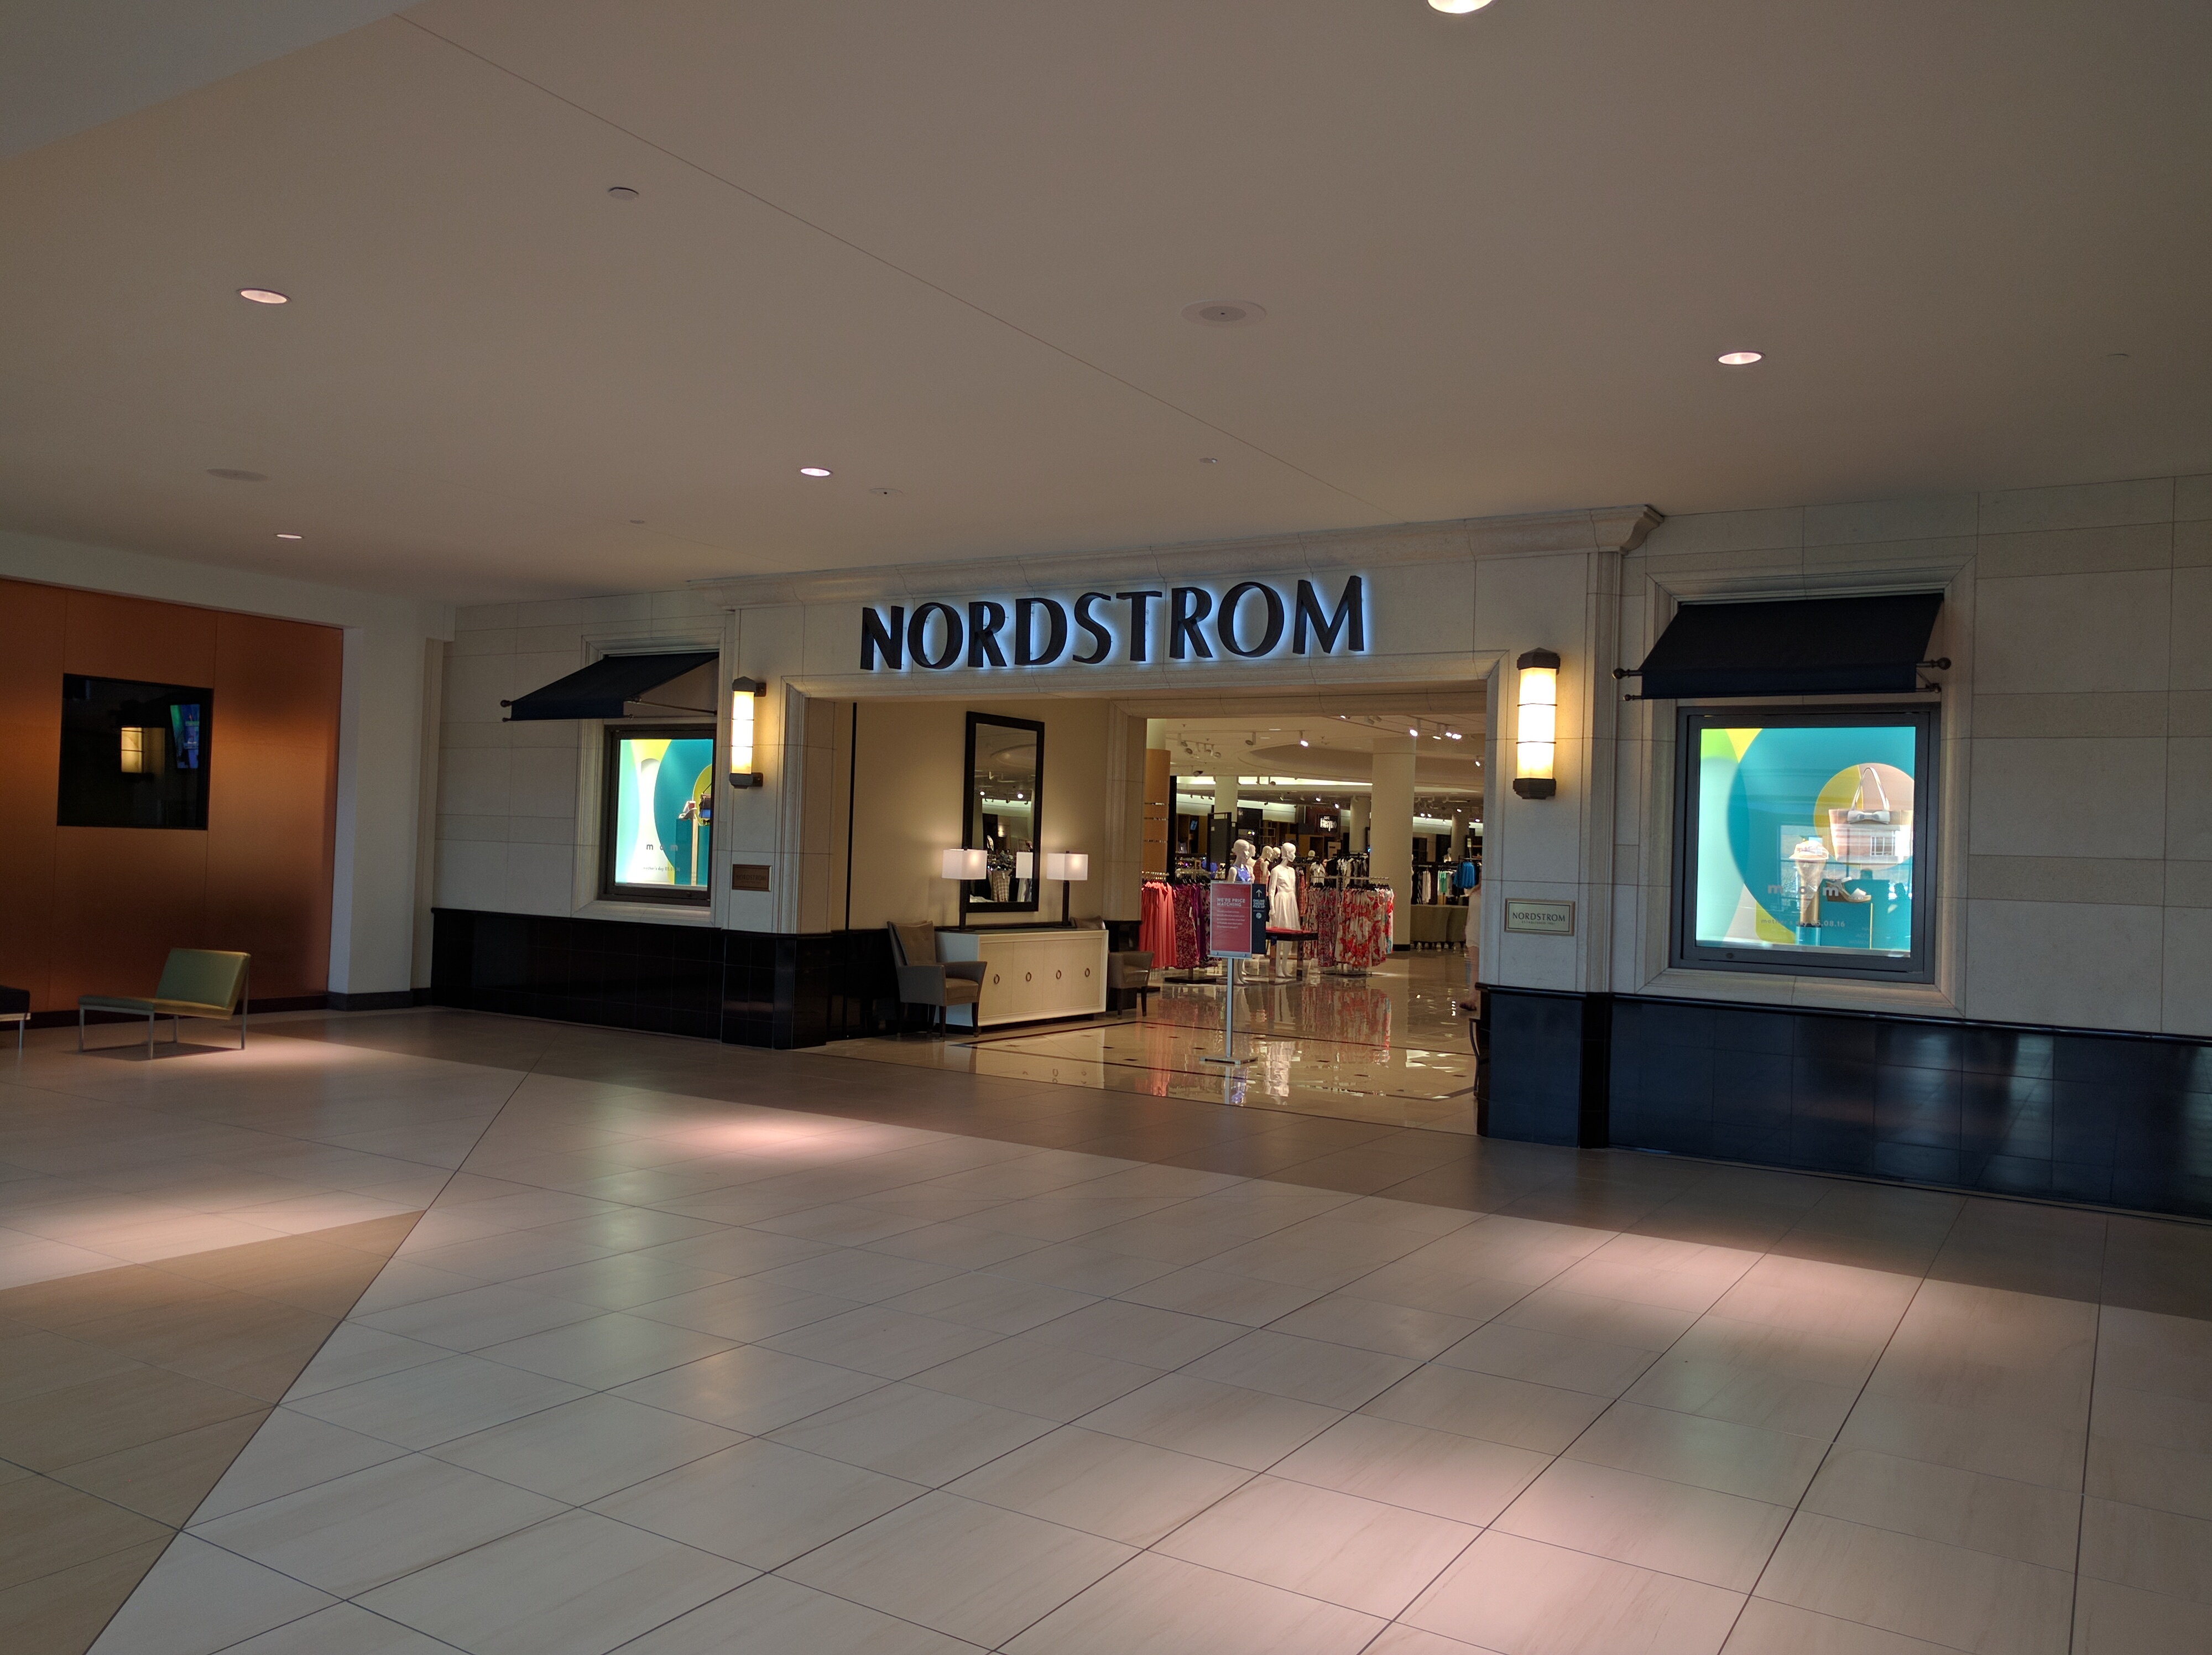 The Fashion Mall At Keystone, Malls and Retail Wiki